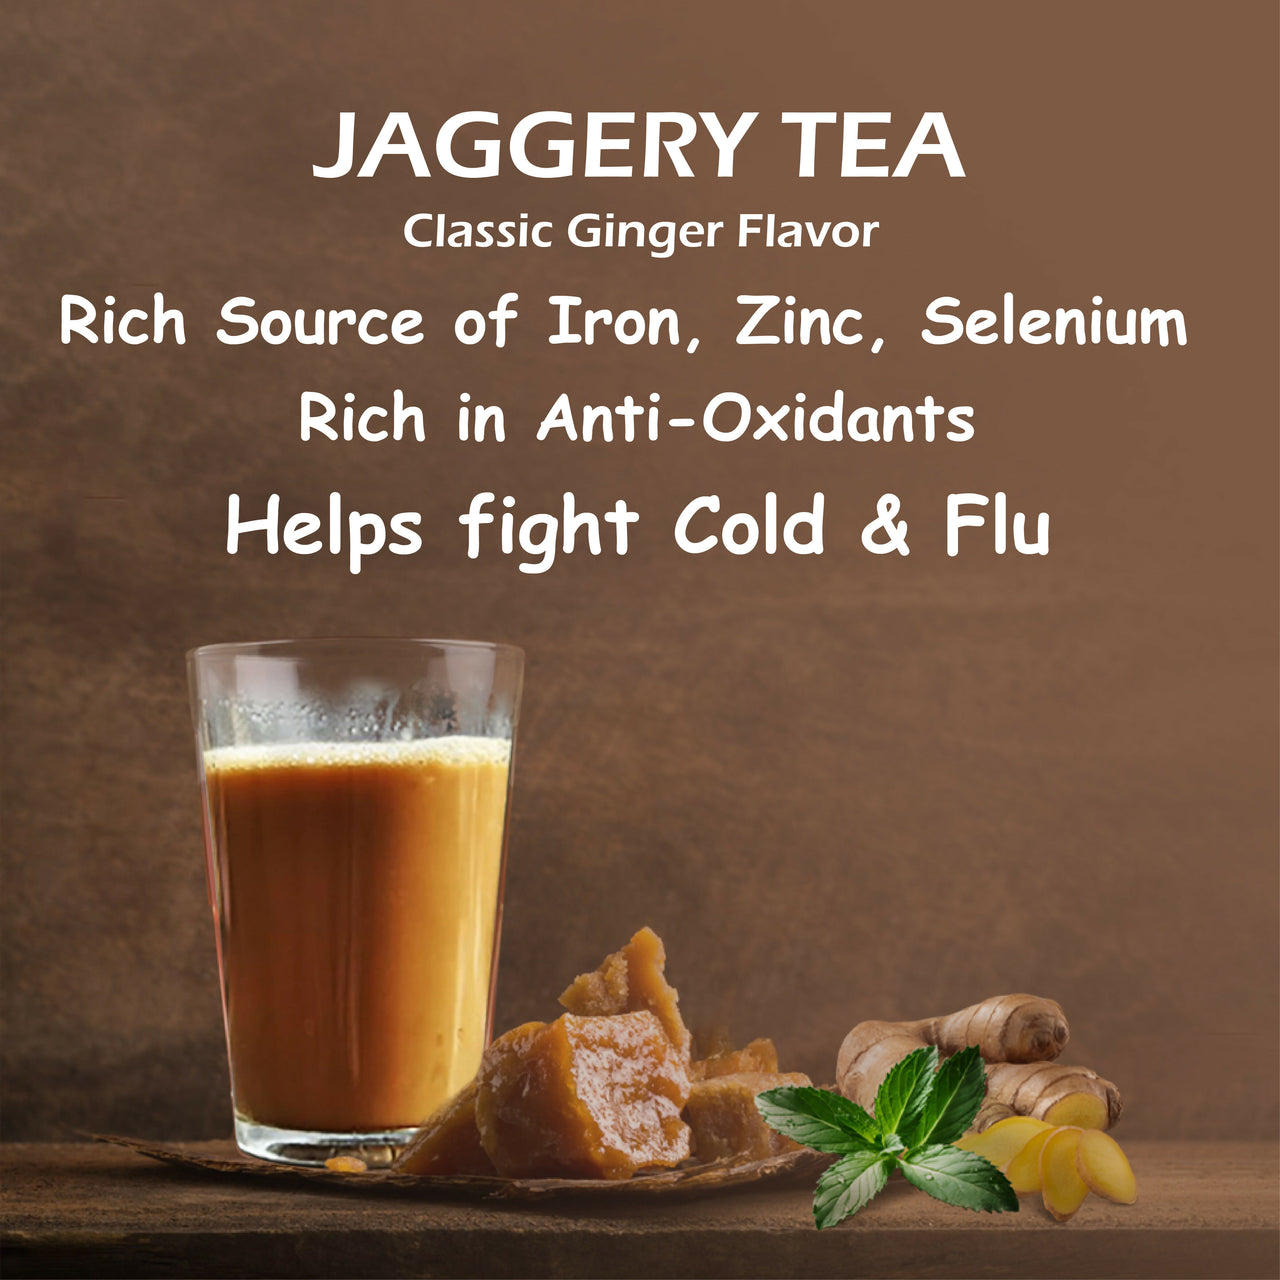 Tea Jaggery 1000x1000 px-05